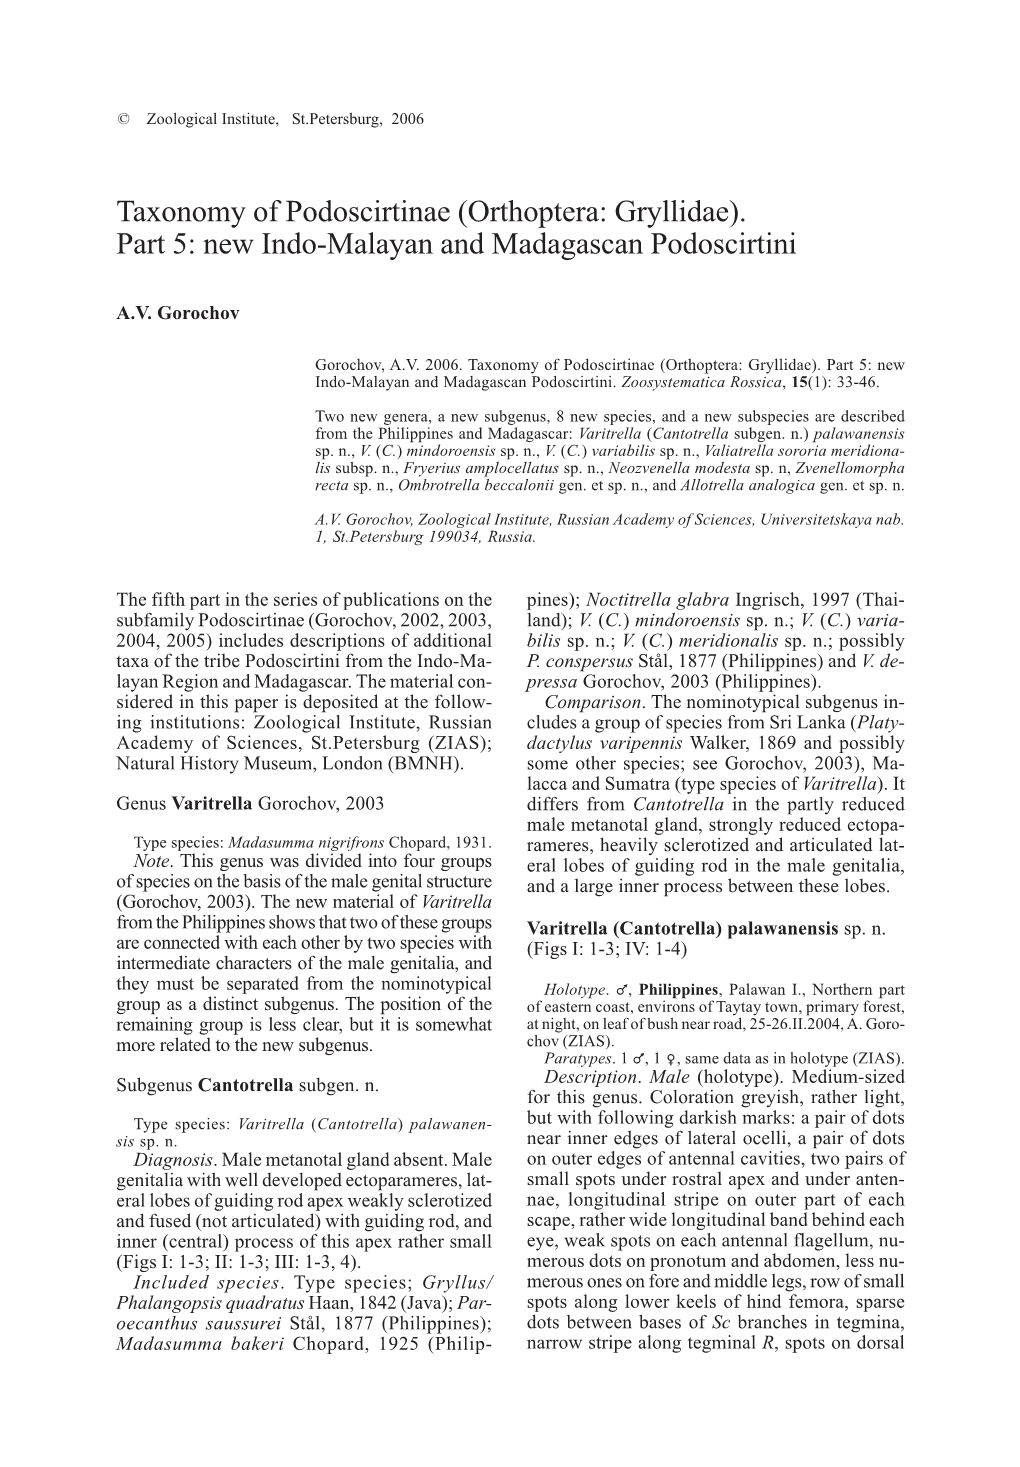 Taxonomy of Podoscirtinae (Orthoptera: Gryllidae). Part 5: New Indo-Malayan and Madagascan Podoscirtini